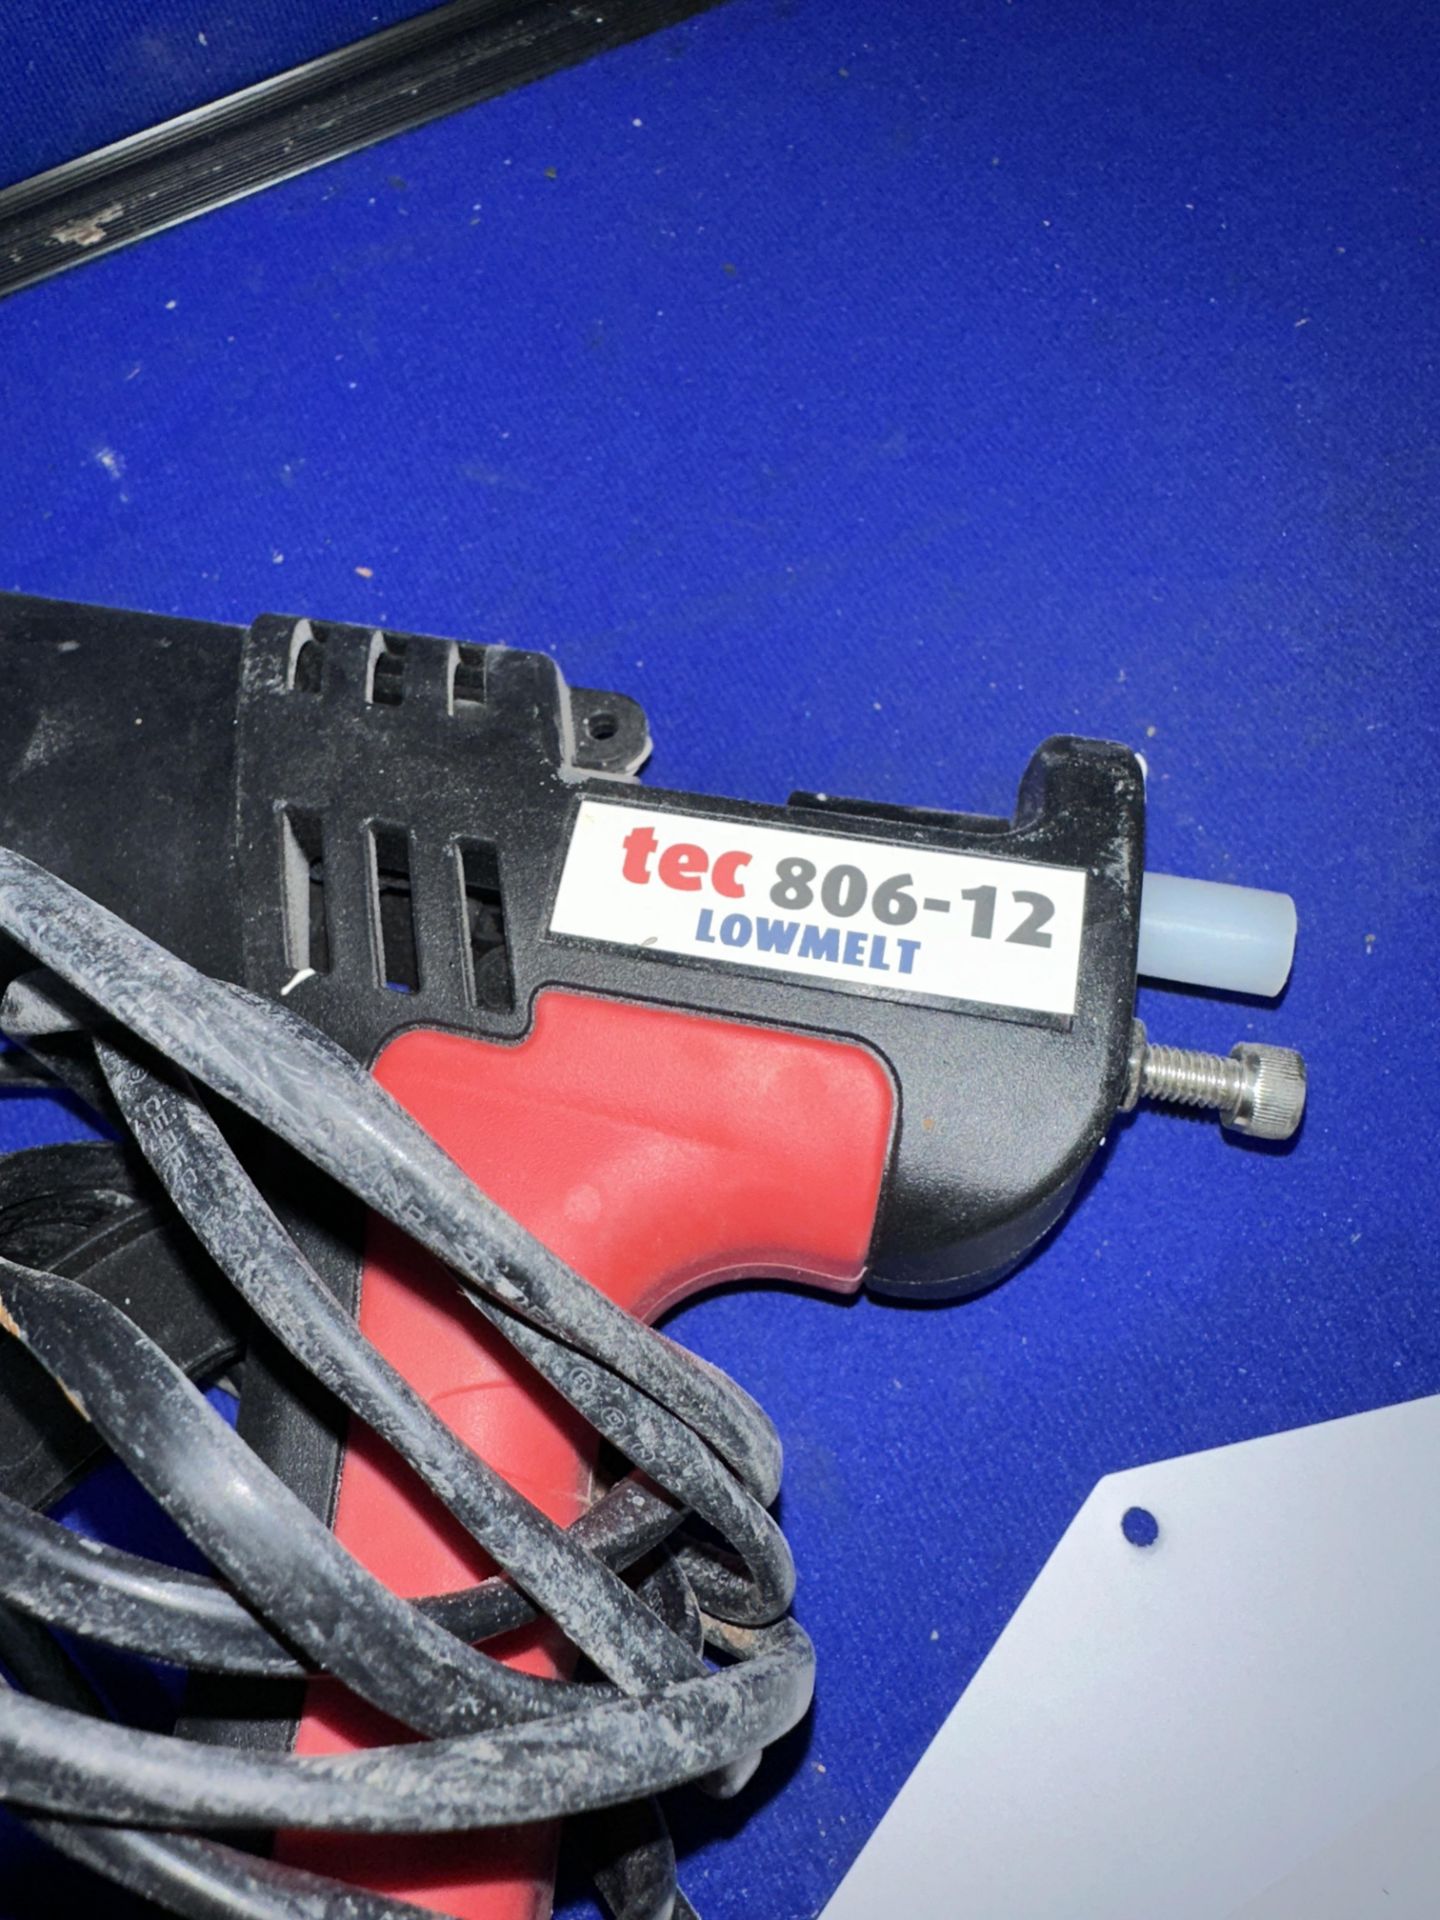 Tec 806-12 lowmelt glue gun - Bild 2 aus 2